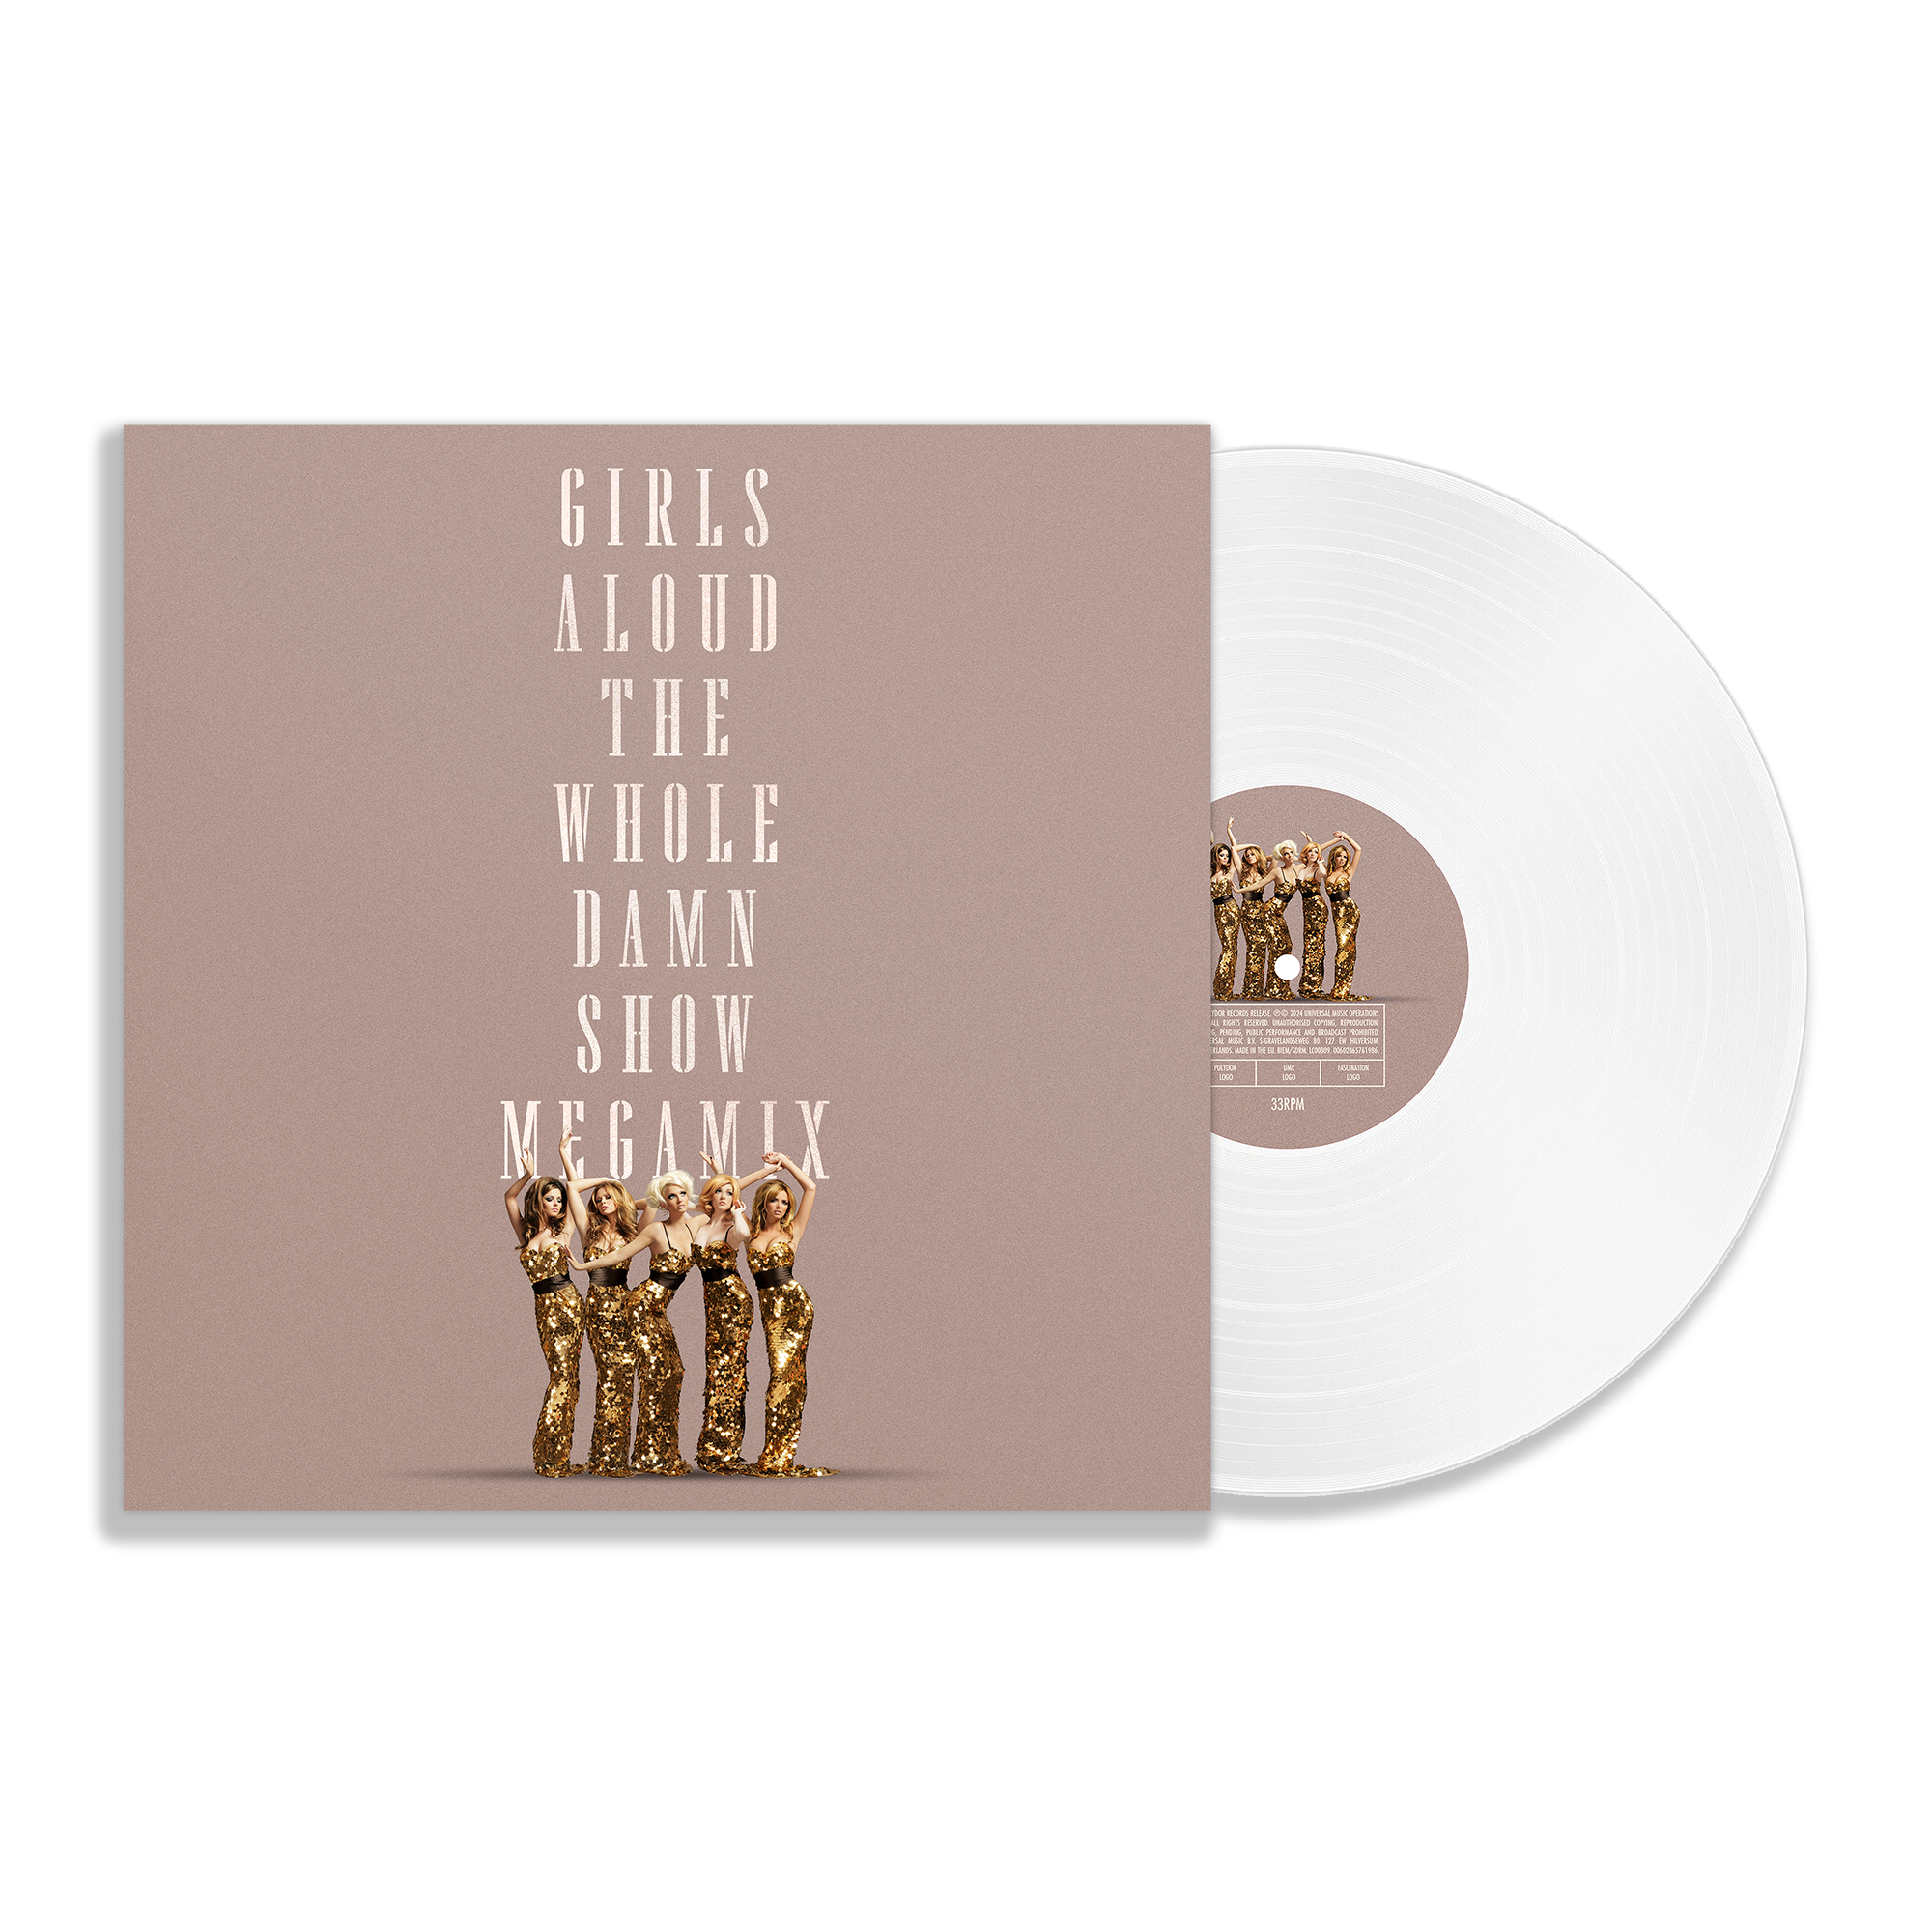 Girls Aloud - The Whole Damn Show - Megamix: Limited Ultra Clear Vinyl LP